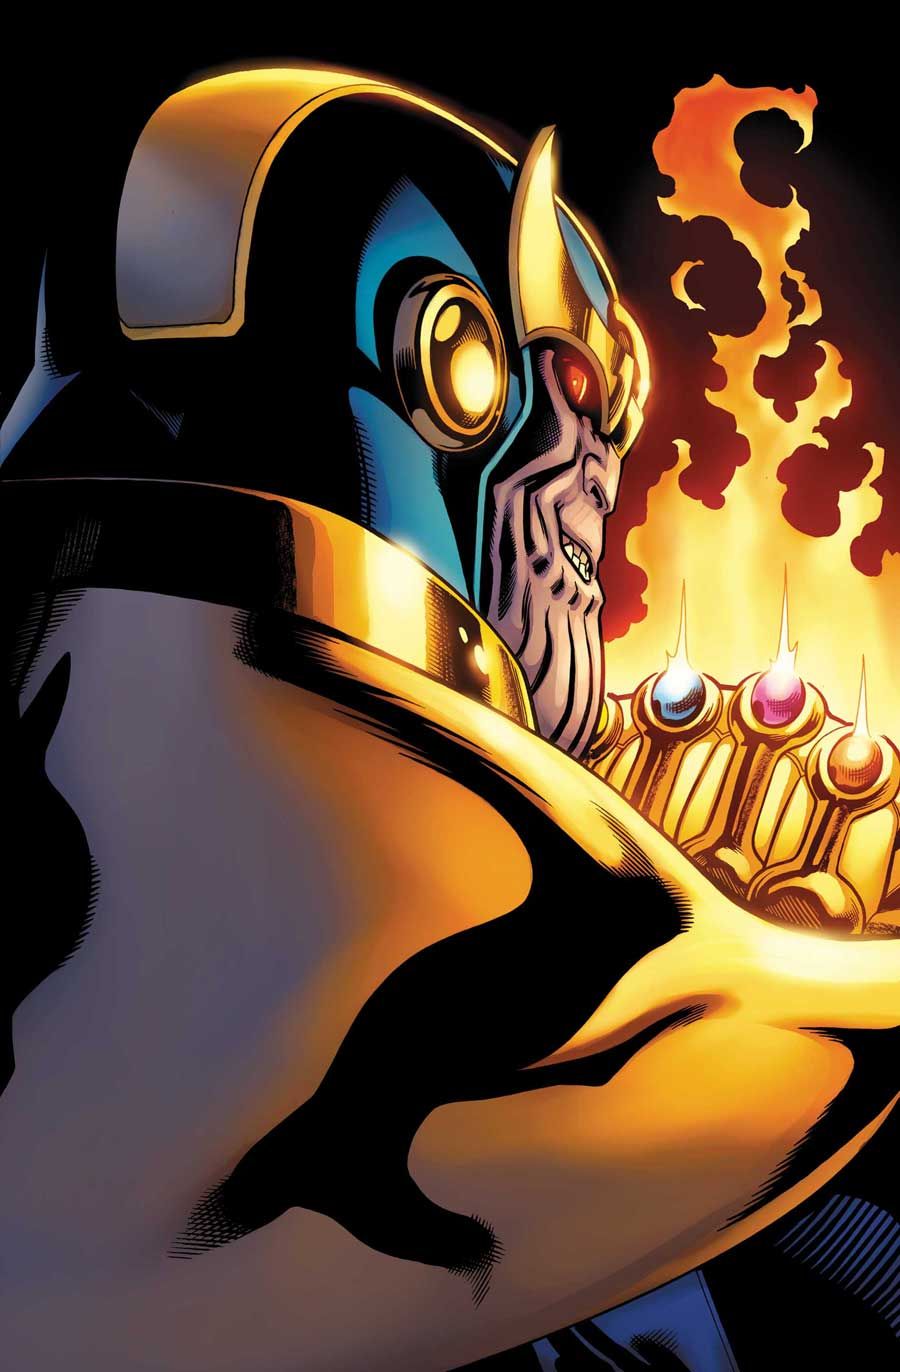 Marvel editor downplays cancelled Thanos